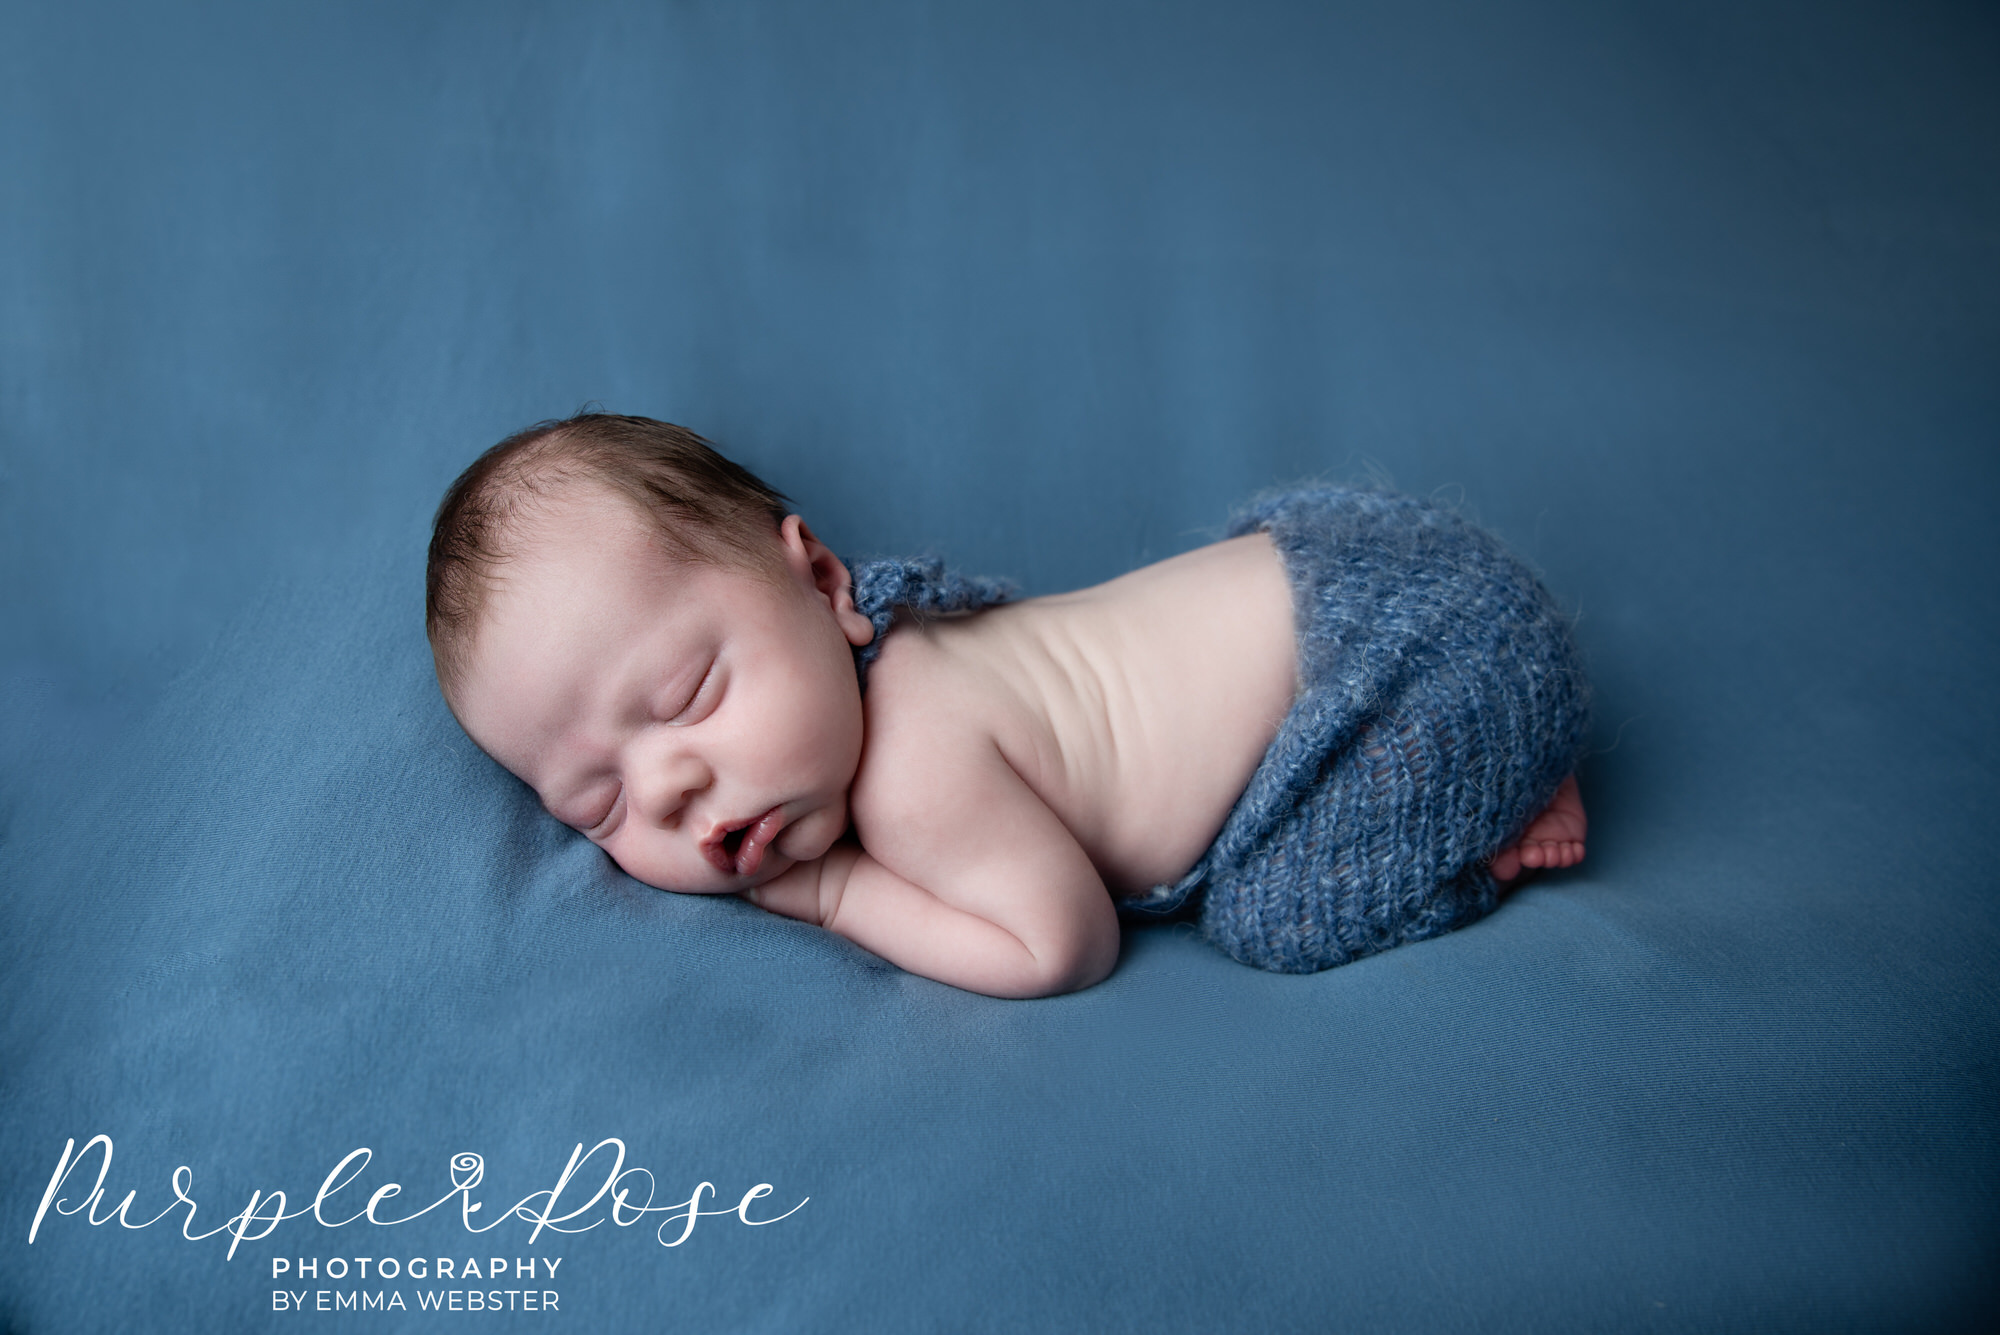 Baby E’s newborn photography shoot